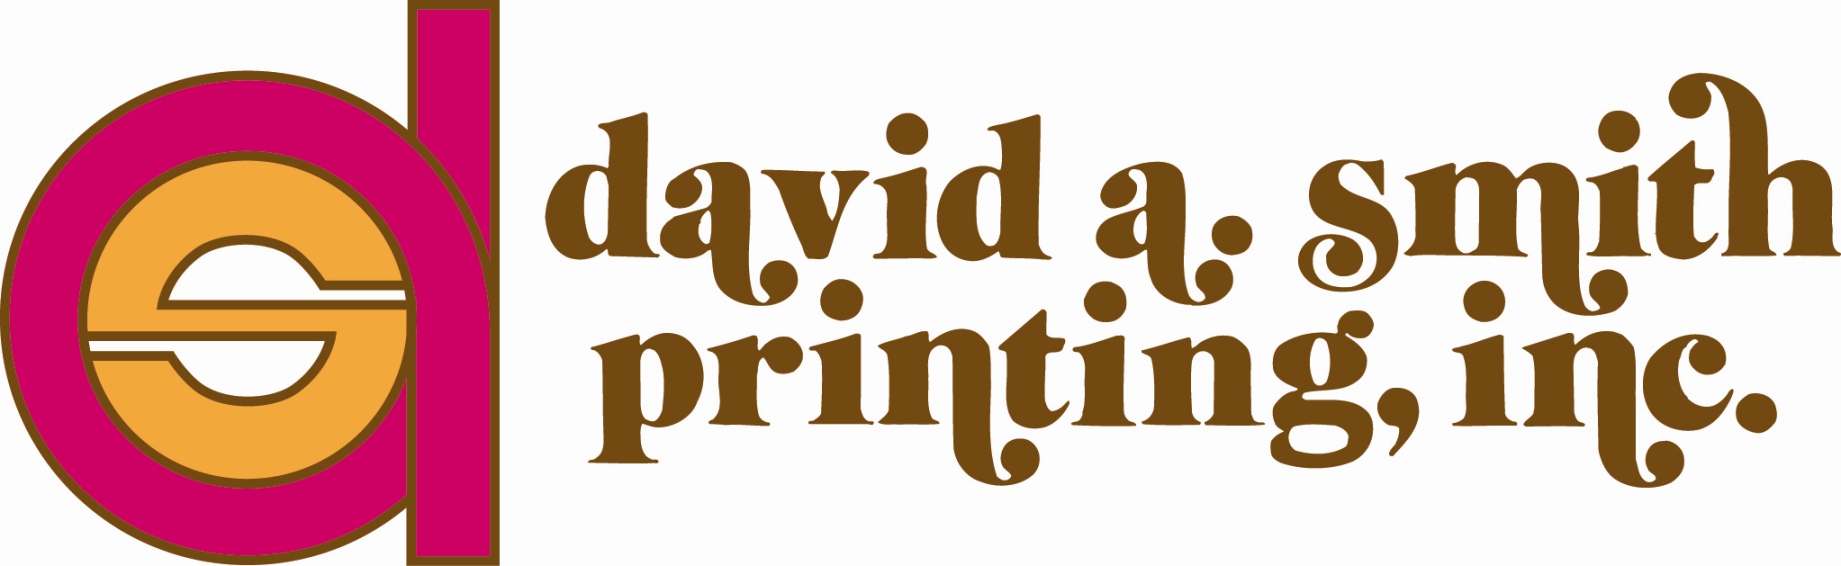 David A. Smith Printing, Inc.'s Logo